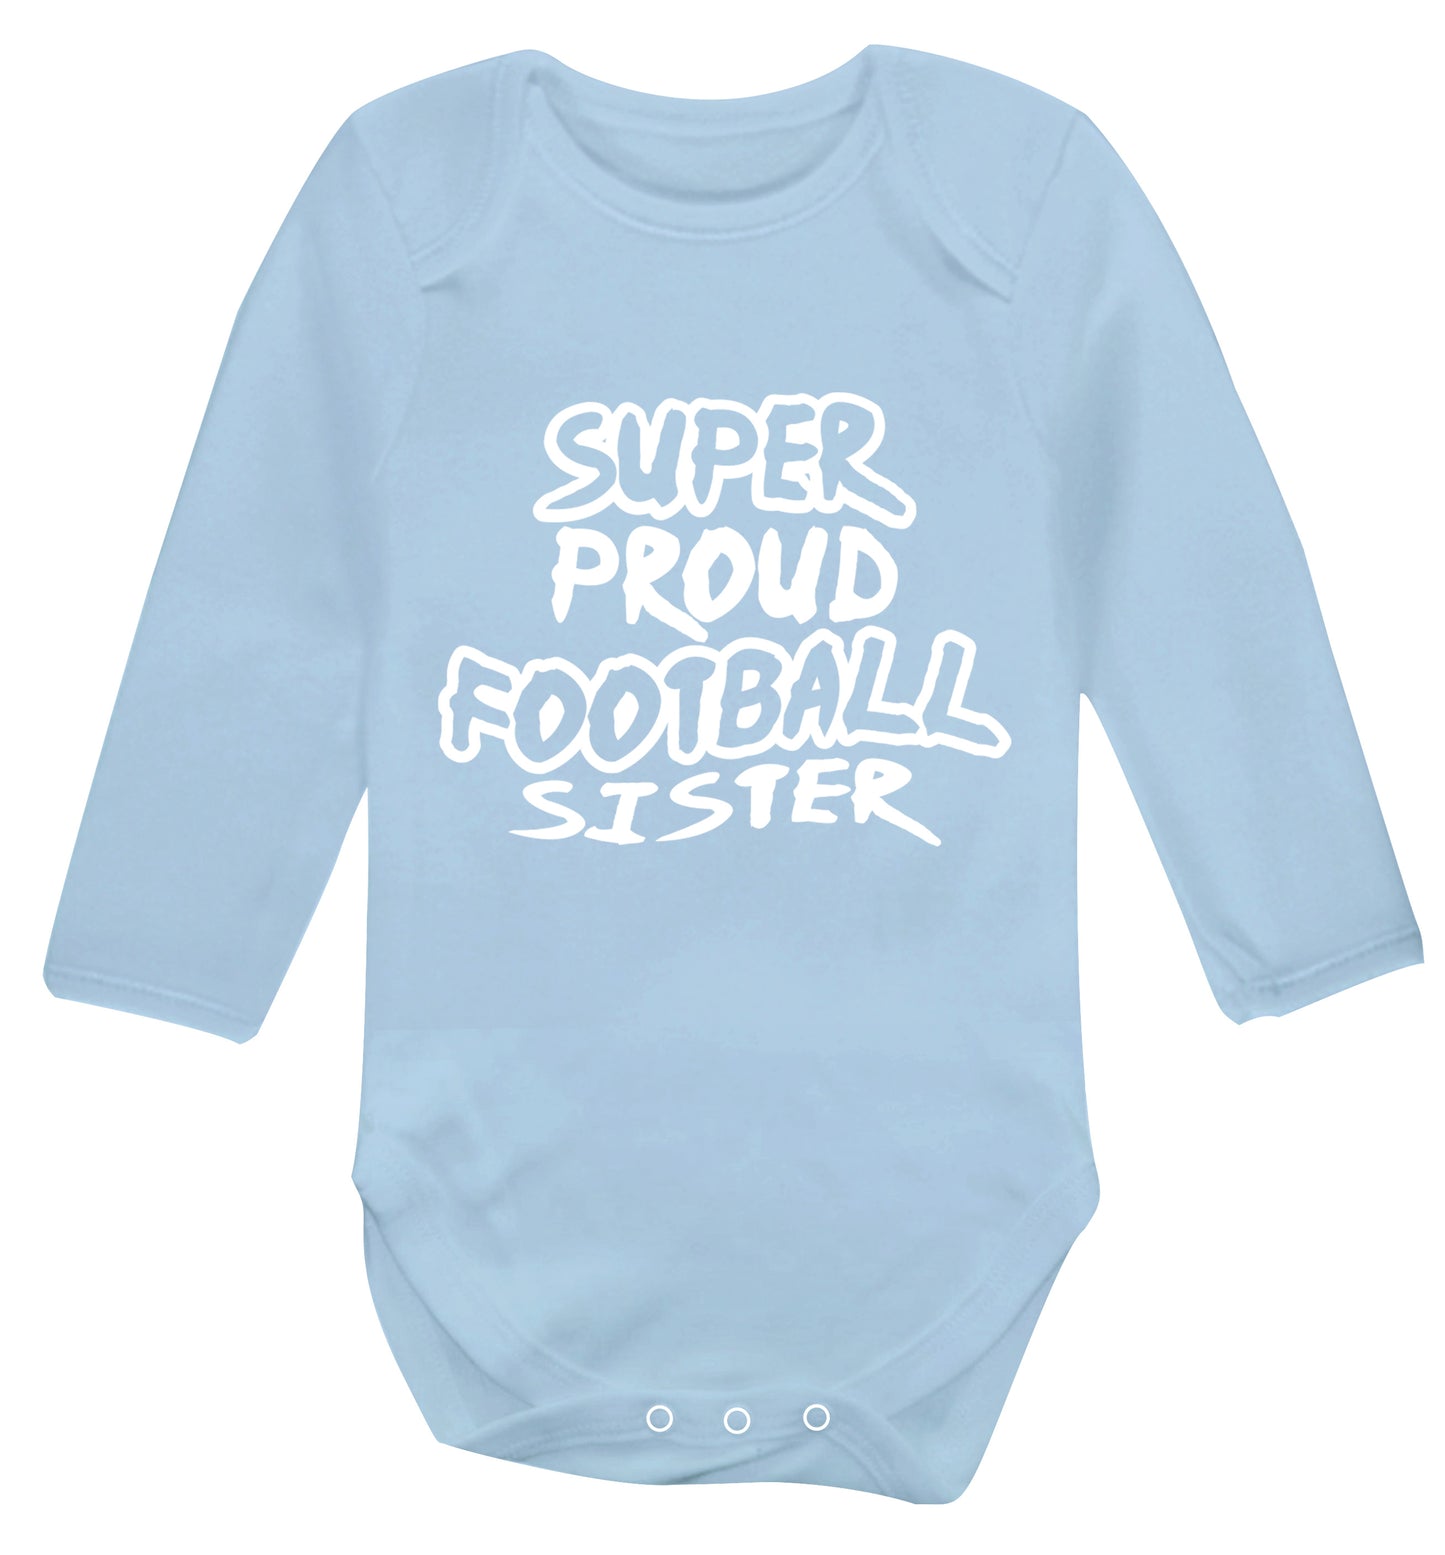 Super proud football sister Baby Vest long sleeved pale blue 6-12 months